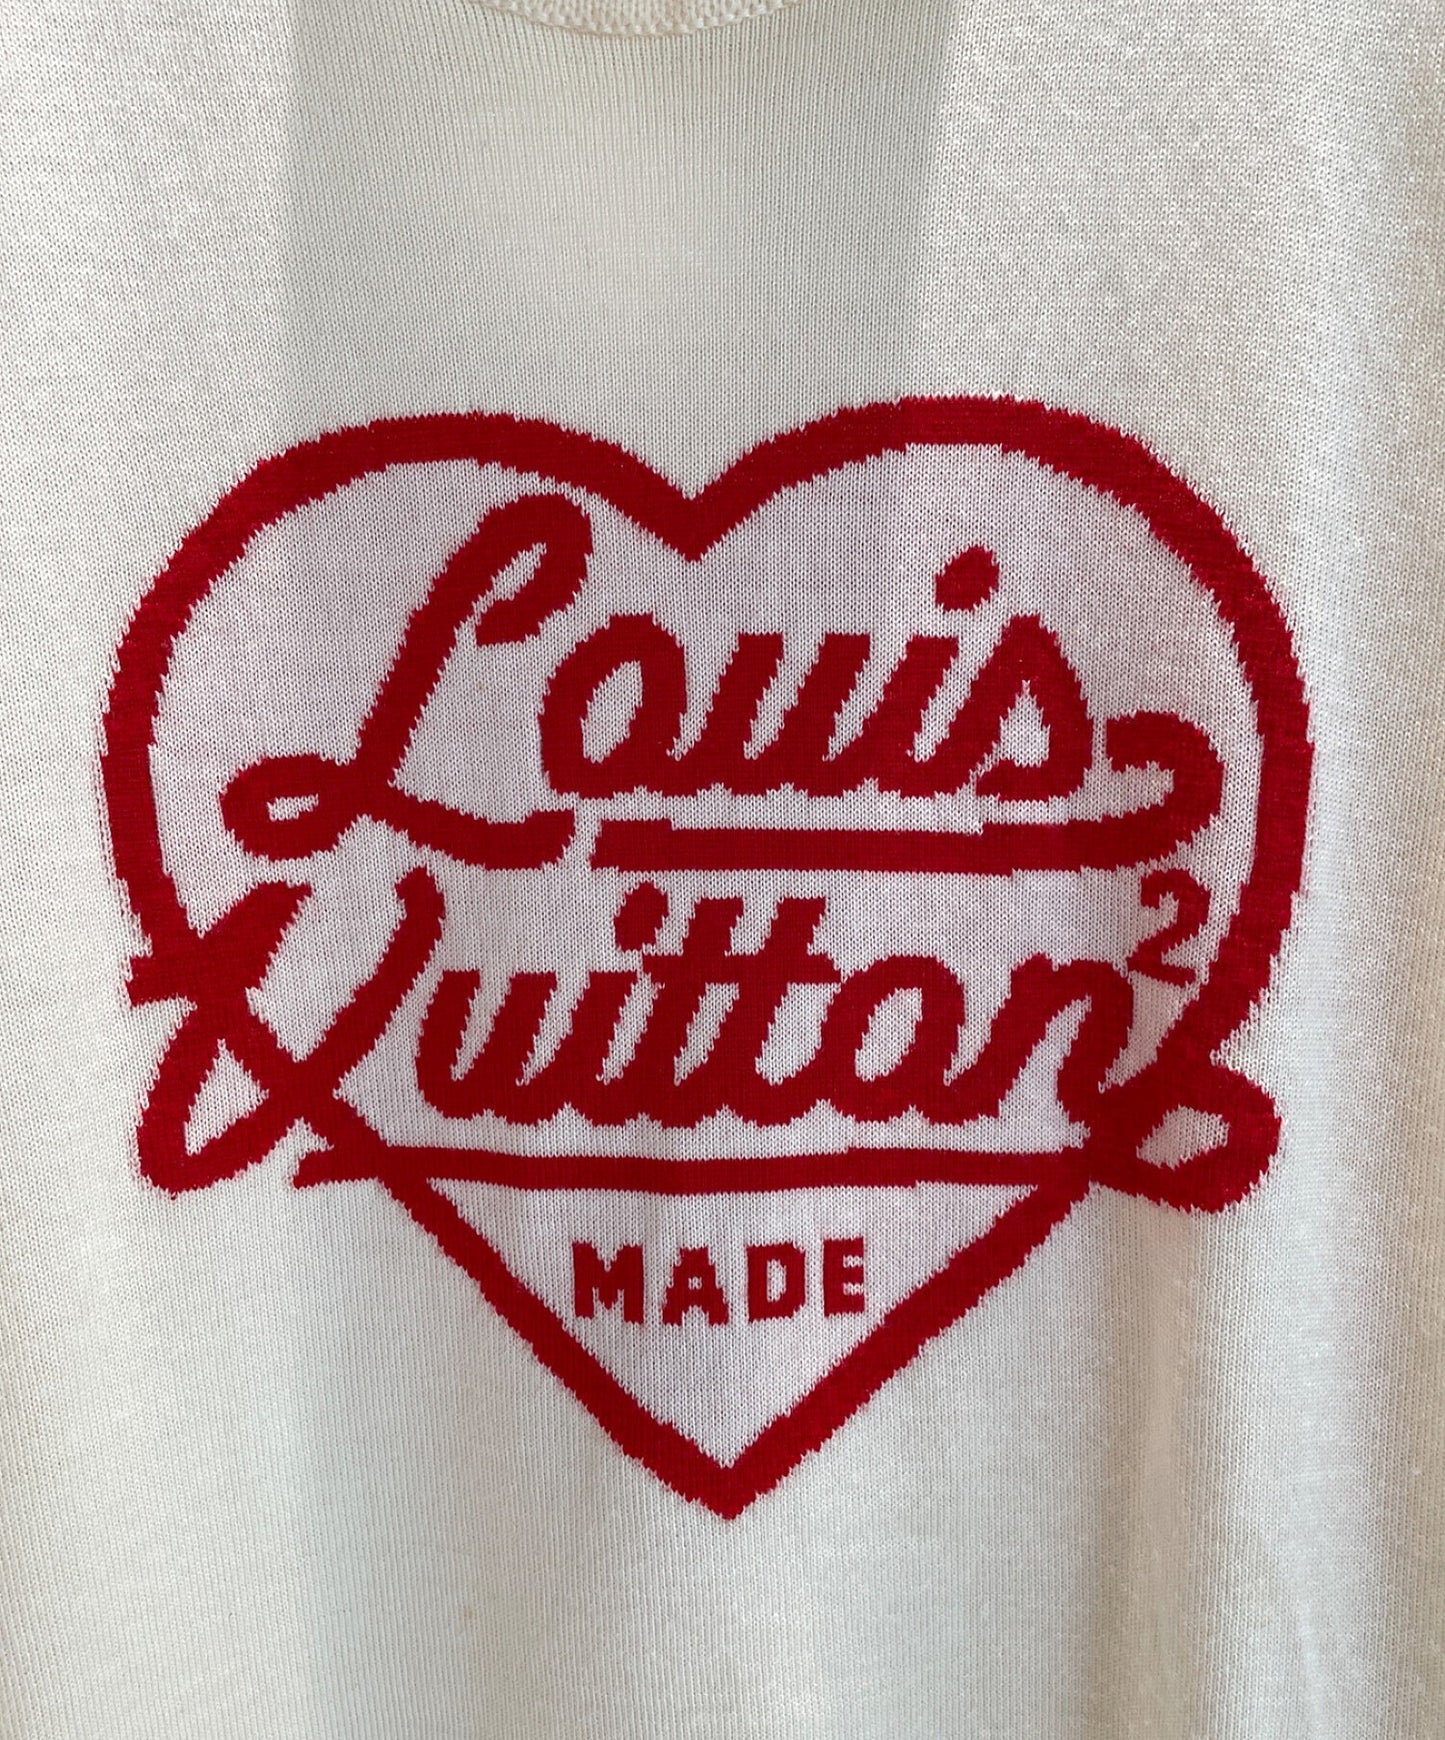 [Pre-owned] LOUIS VUITTON×NIGO Intarsia Heart Turtleneck Knit Sweater RM221M